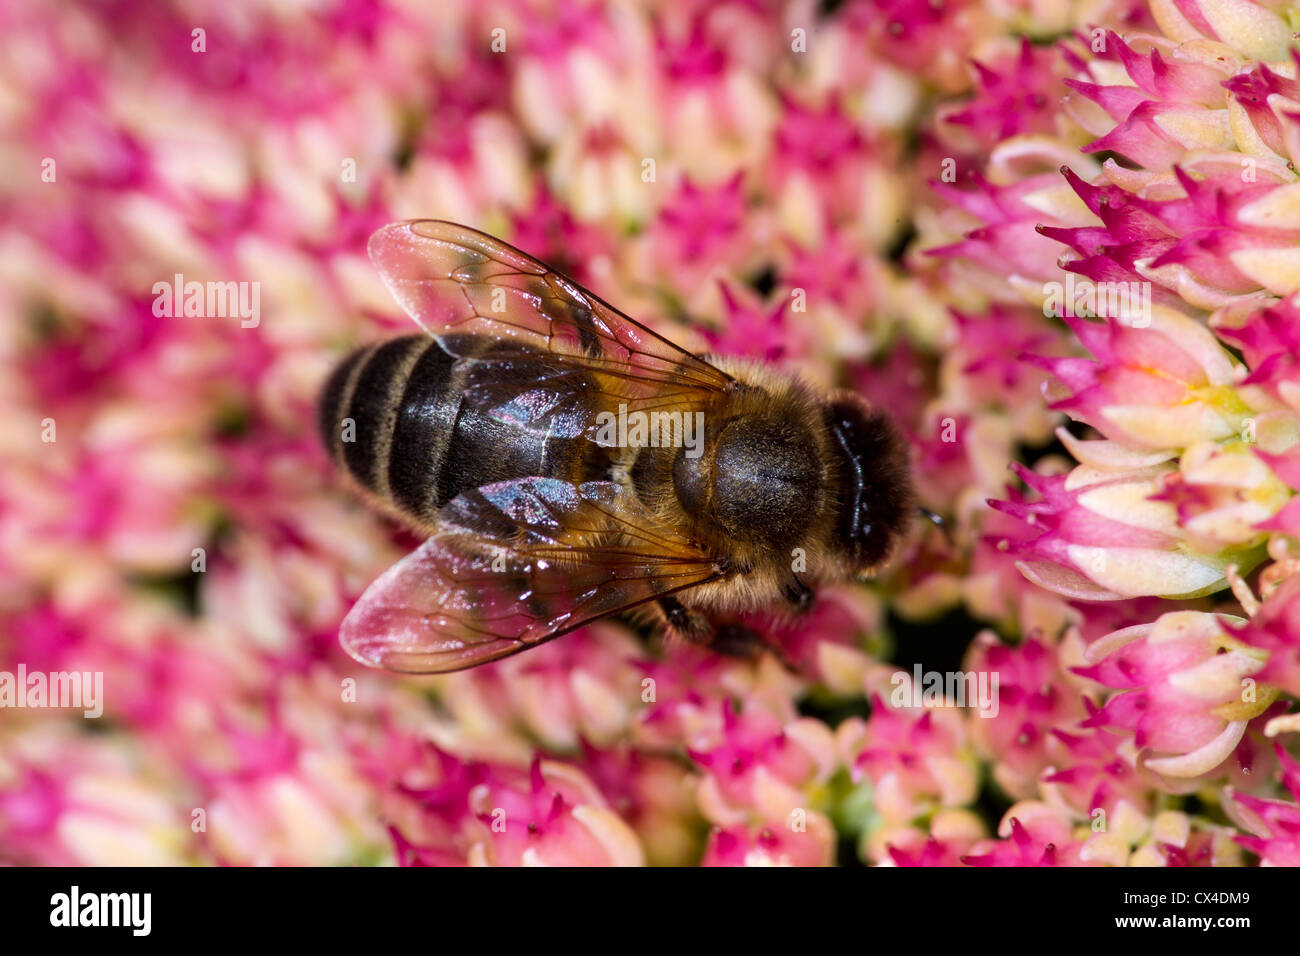 Honey bee (Apls mellifera) collecting nectar from sedum (stonecrop), a garden succulent bearing pink flowers in Autumn Stock Photo